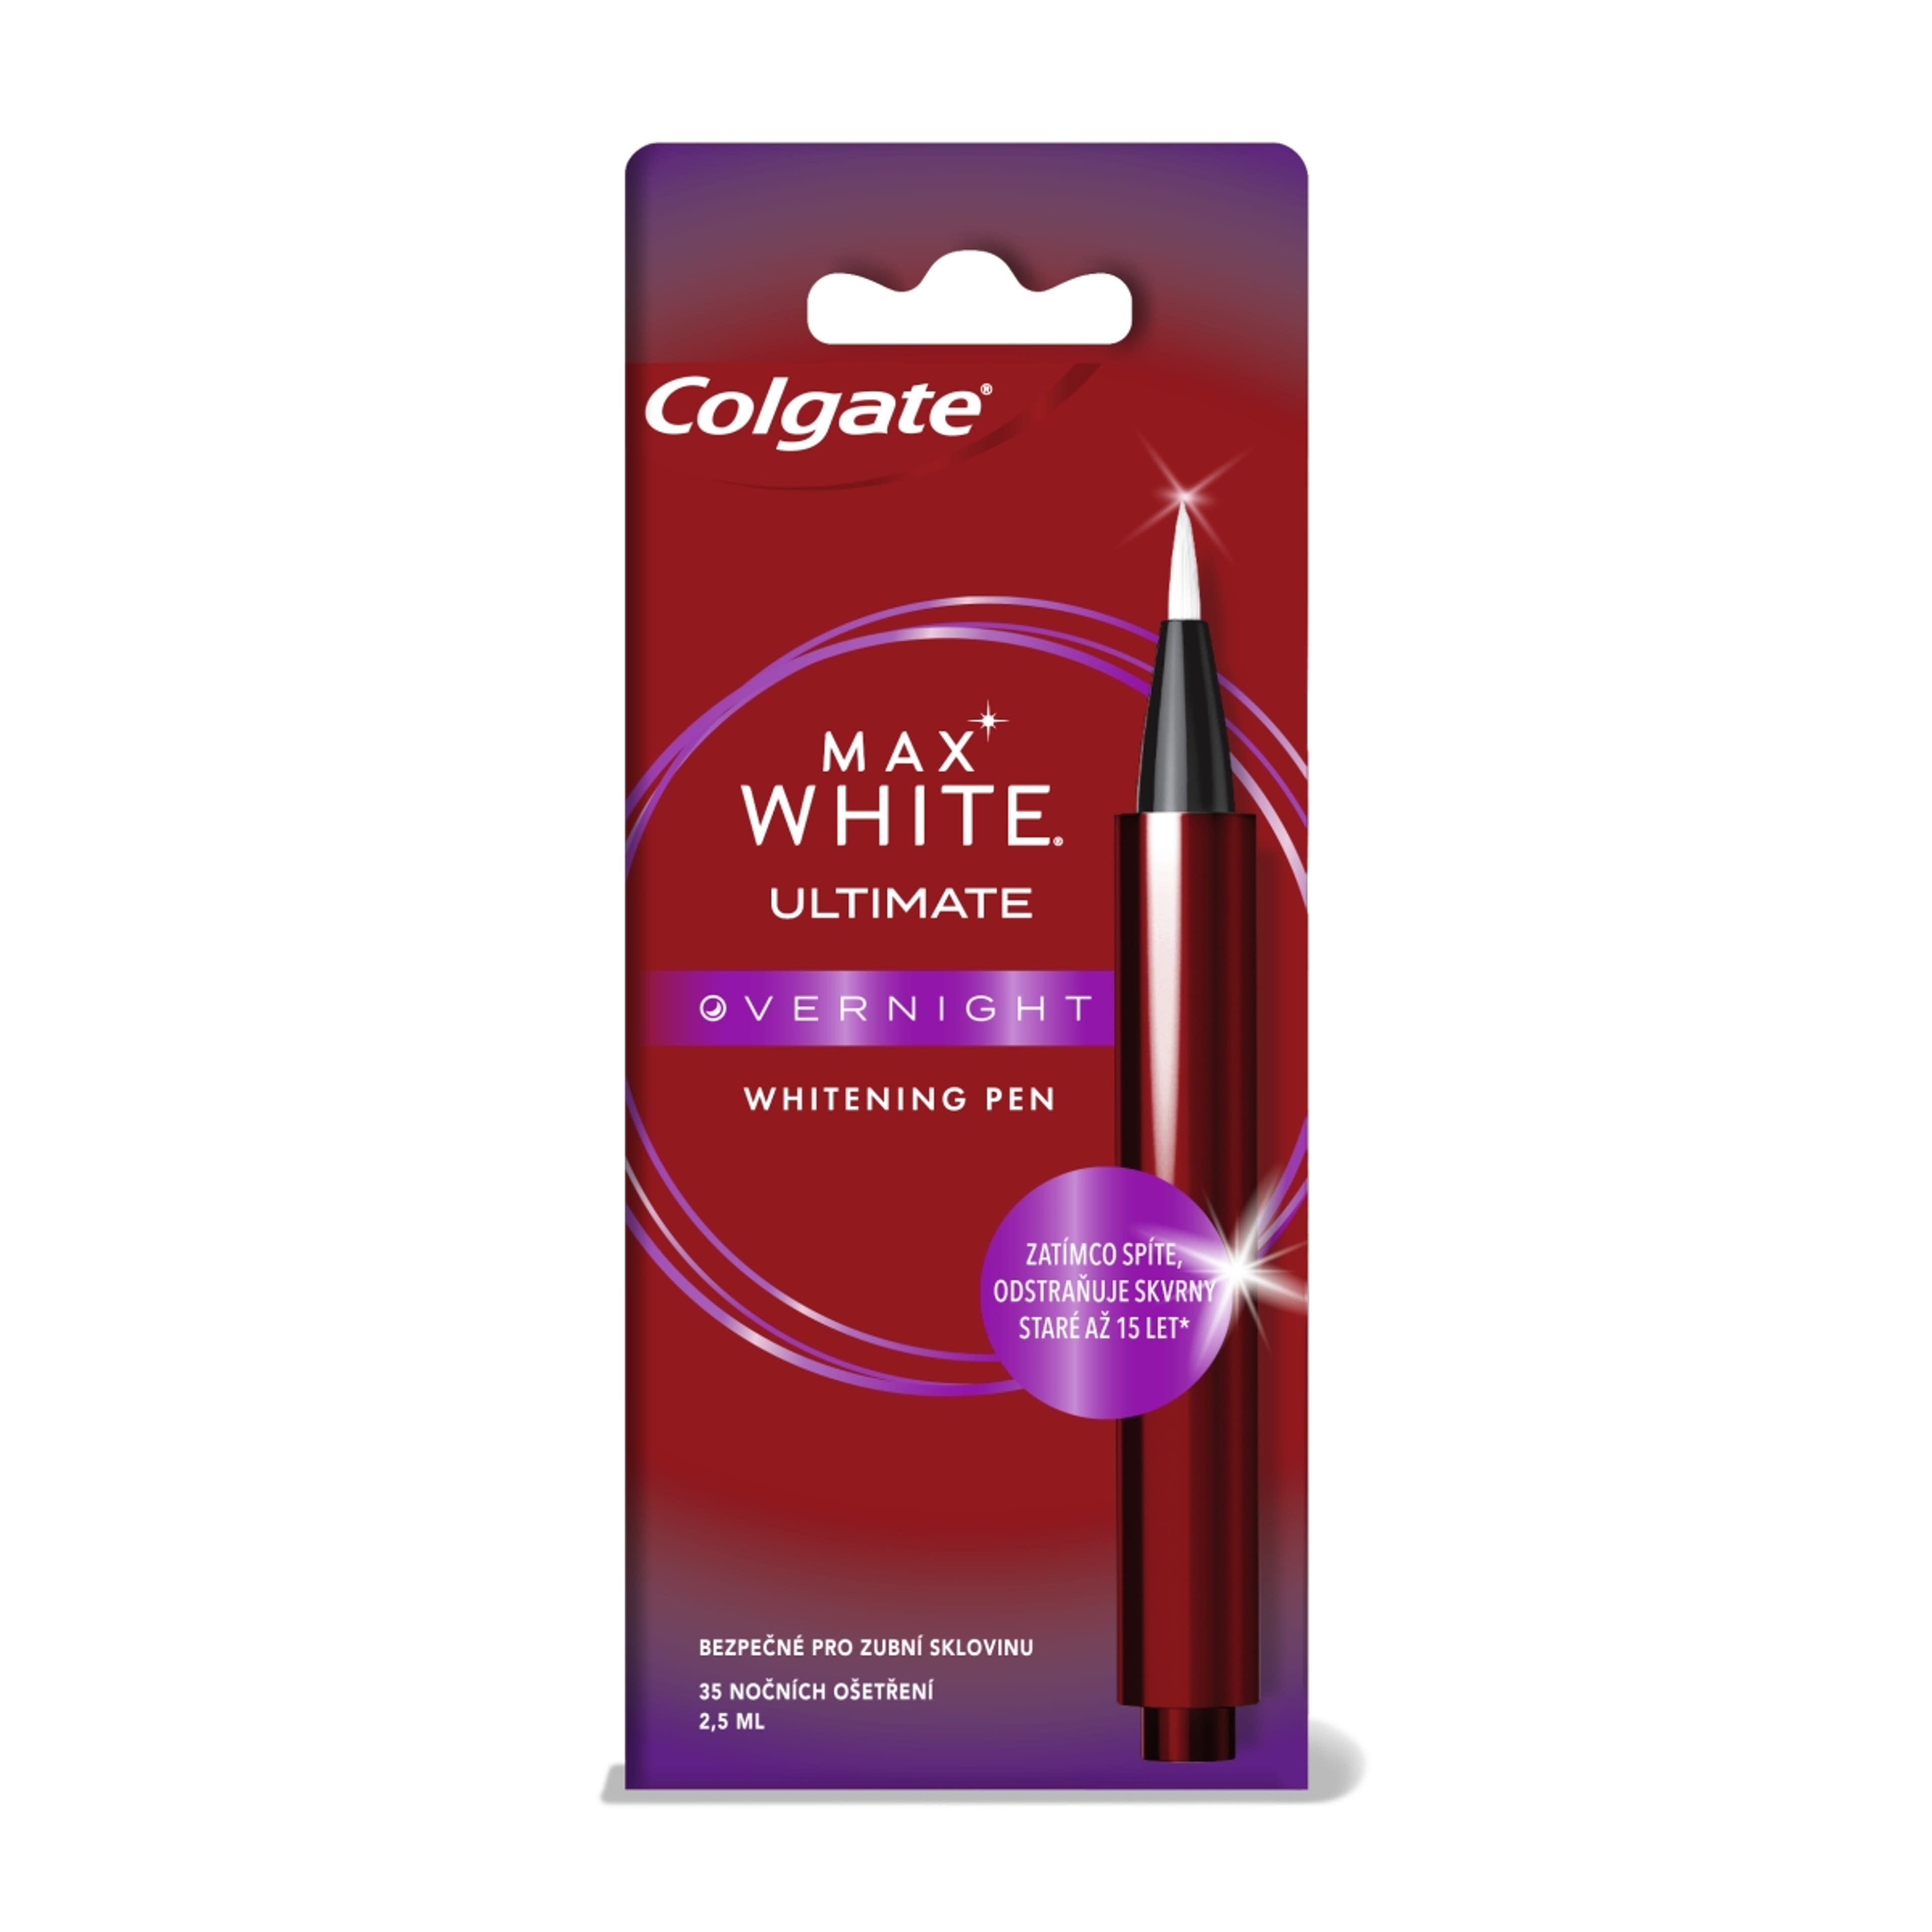 Colgate Max White Ultimate éjszakai fogfehérítő toll - 2,5 ml